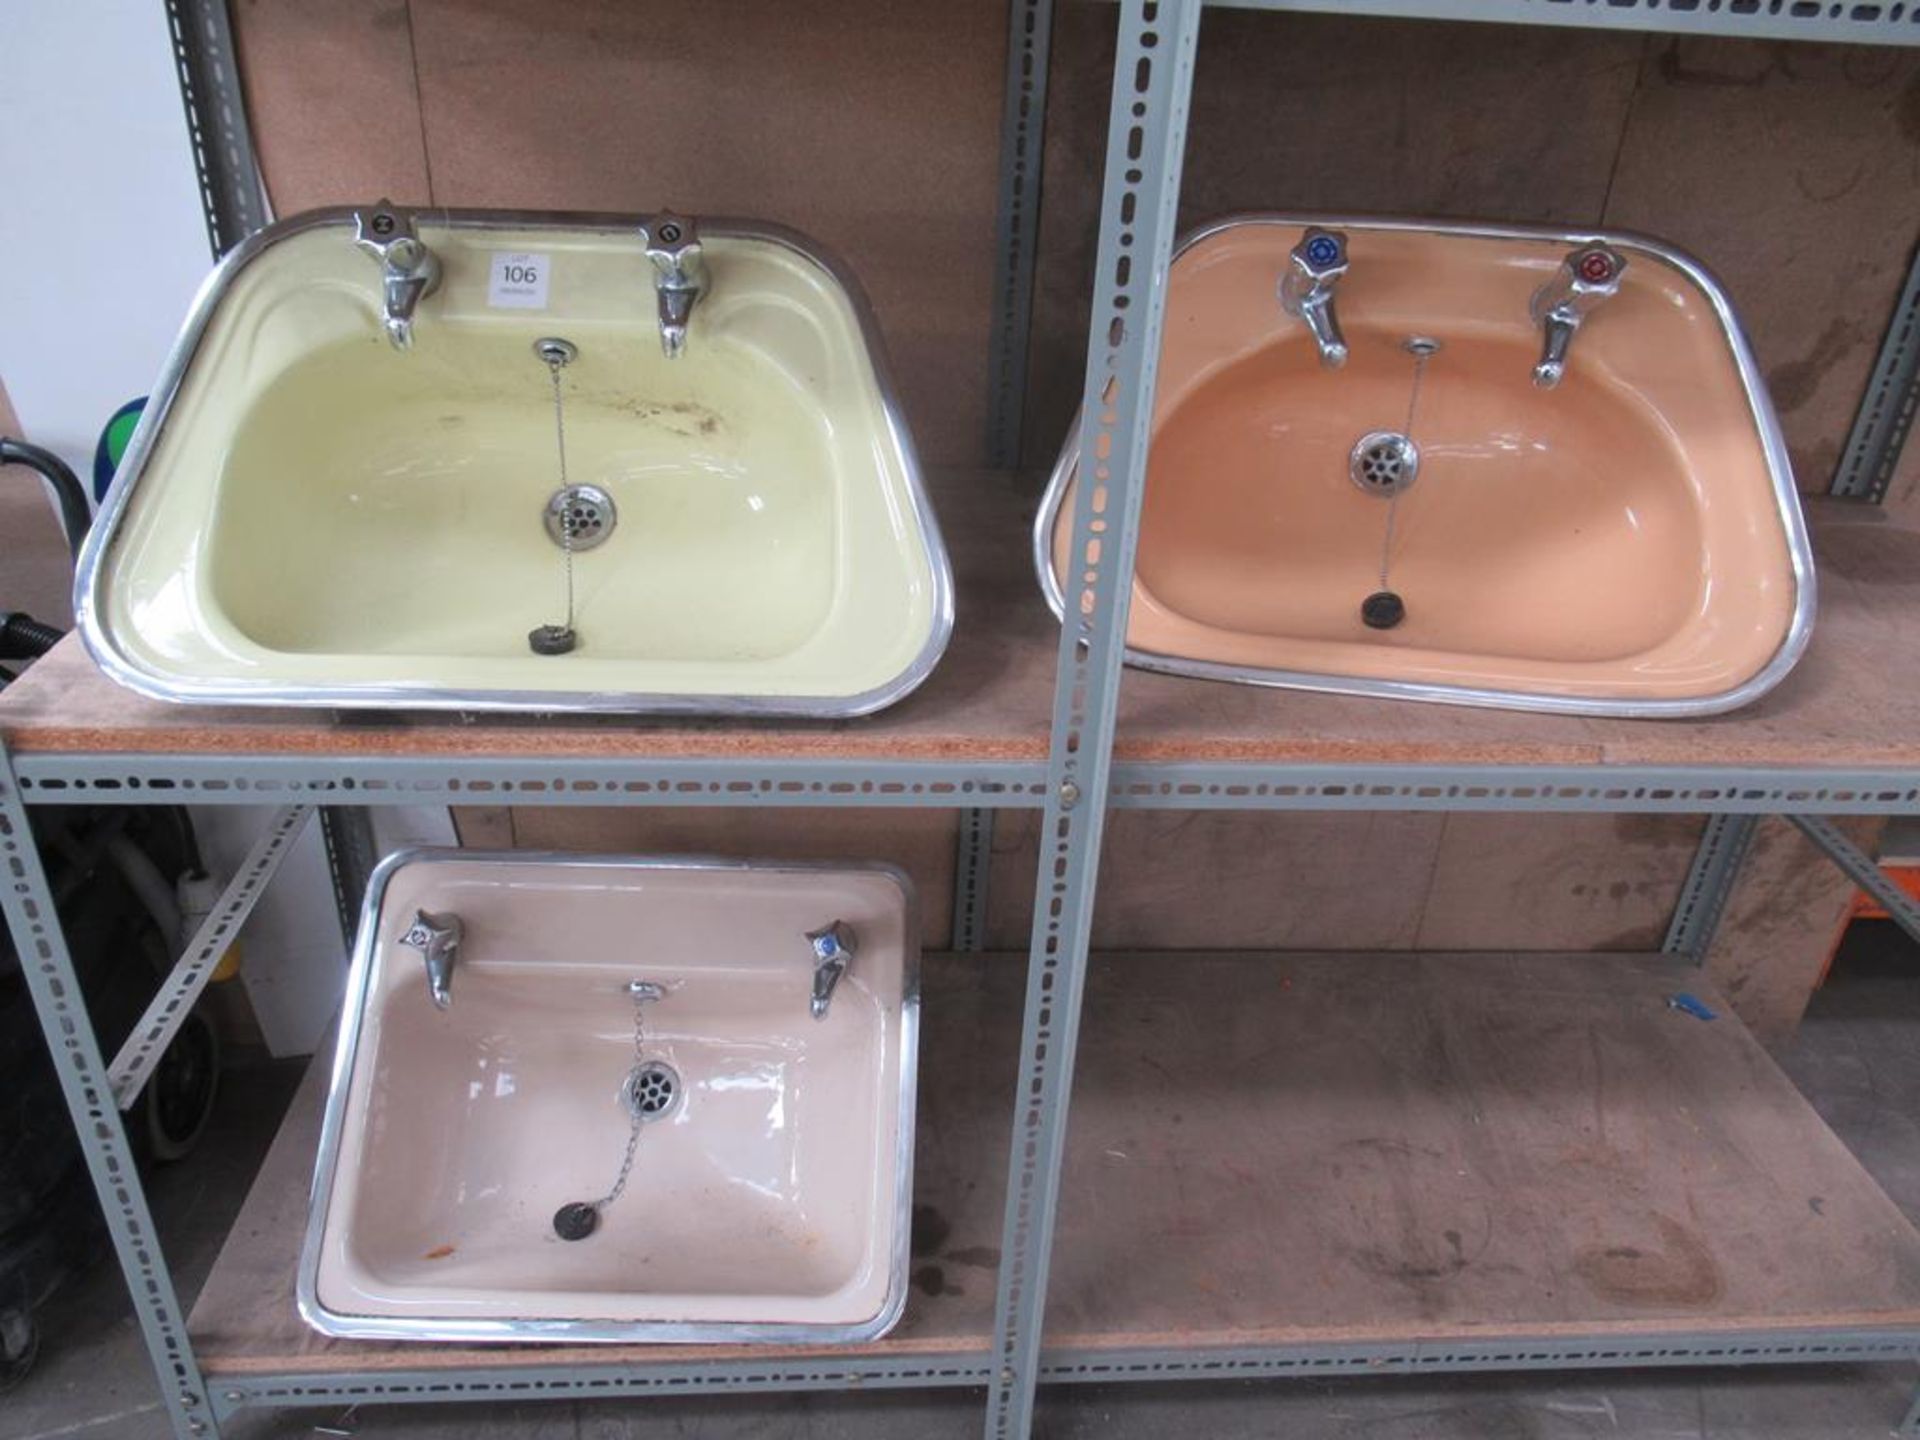 3 x Vintage Styled Coloured Sink Basins